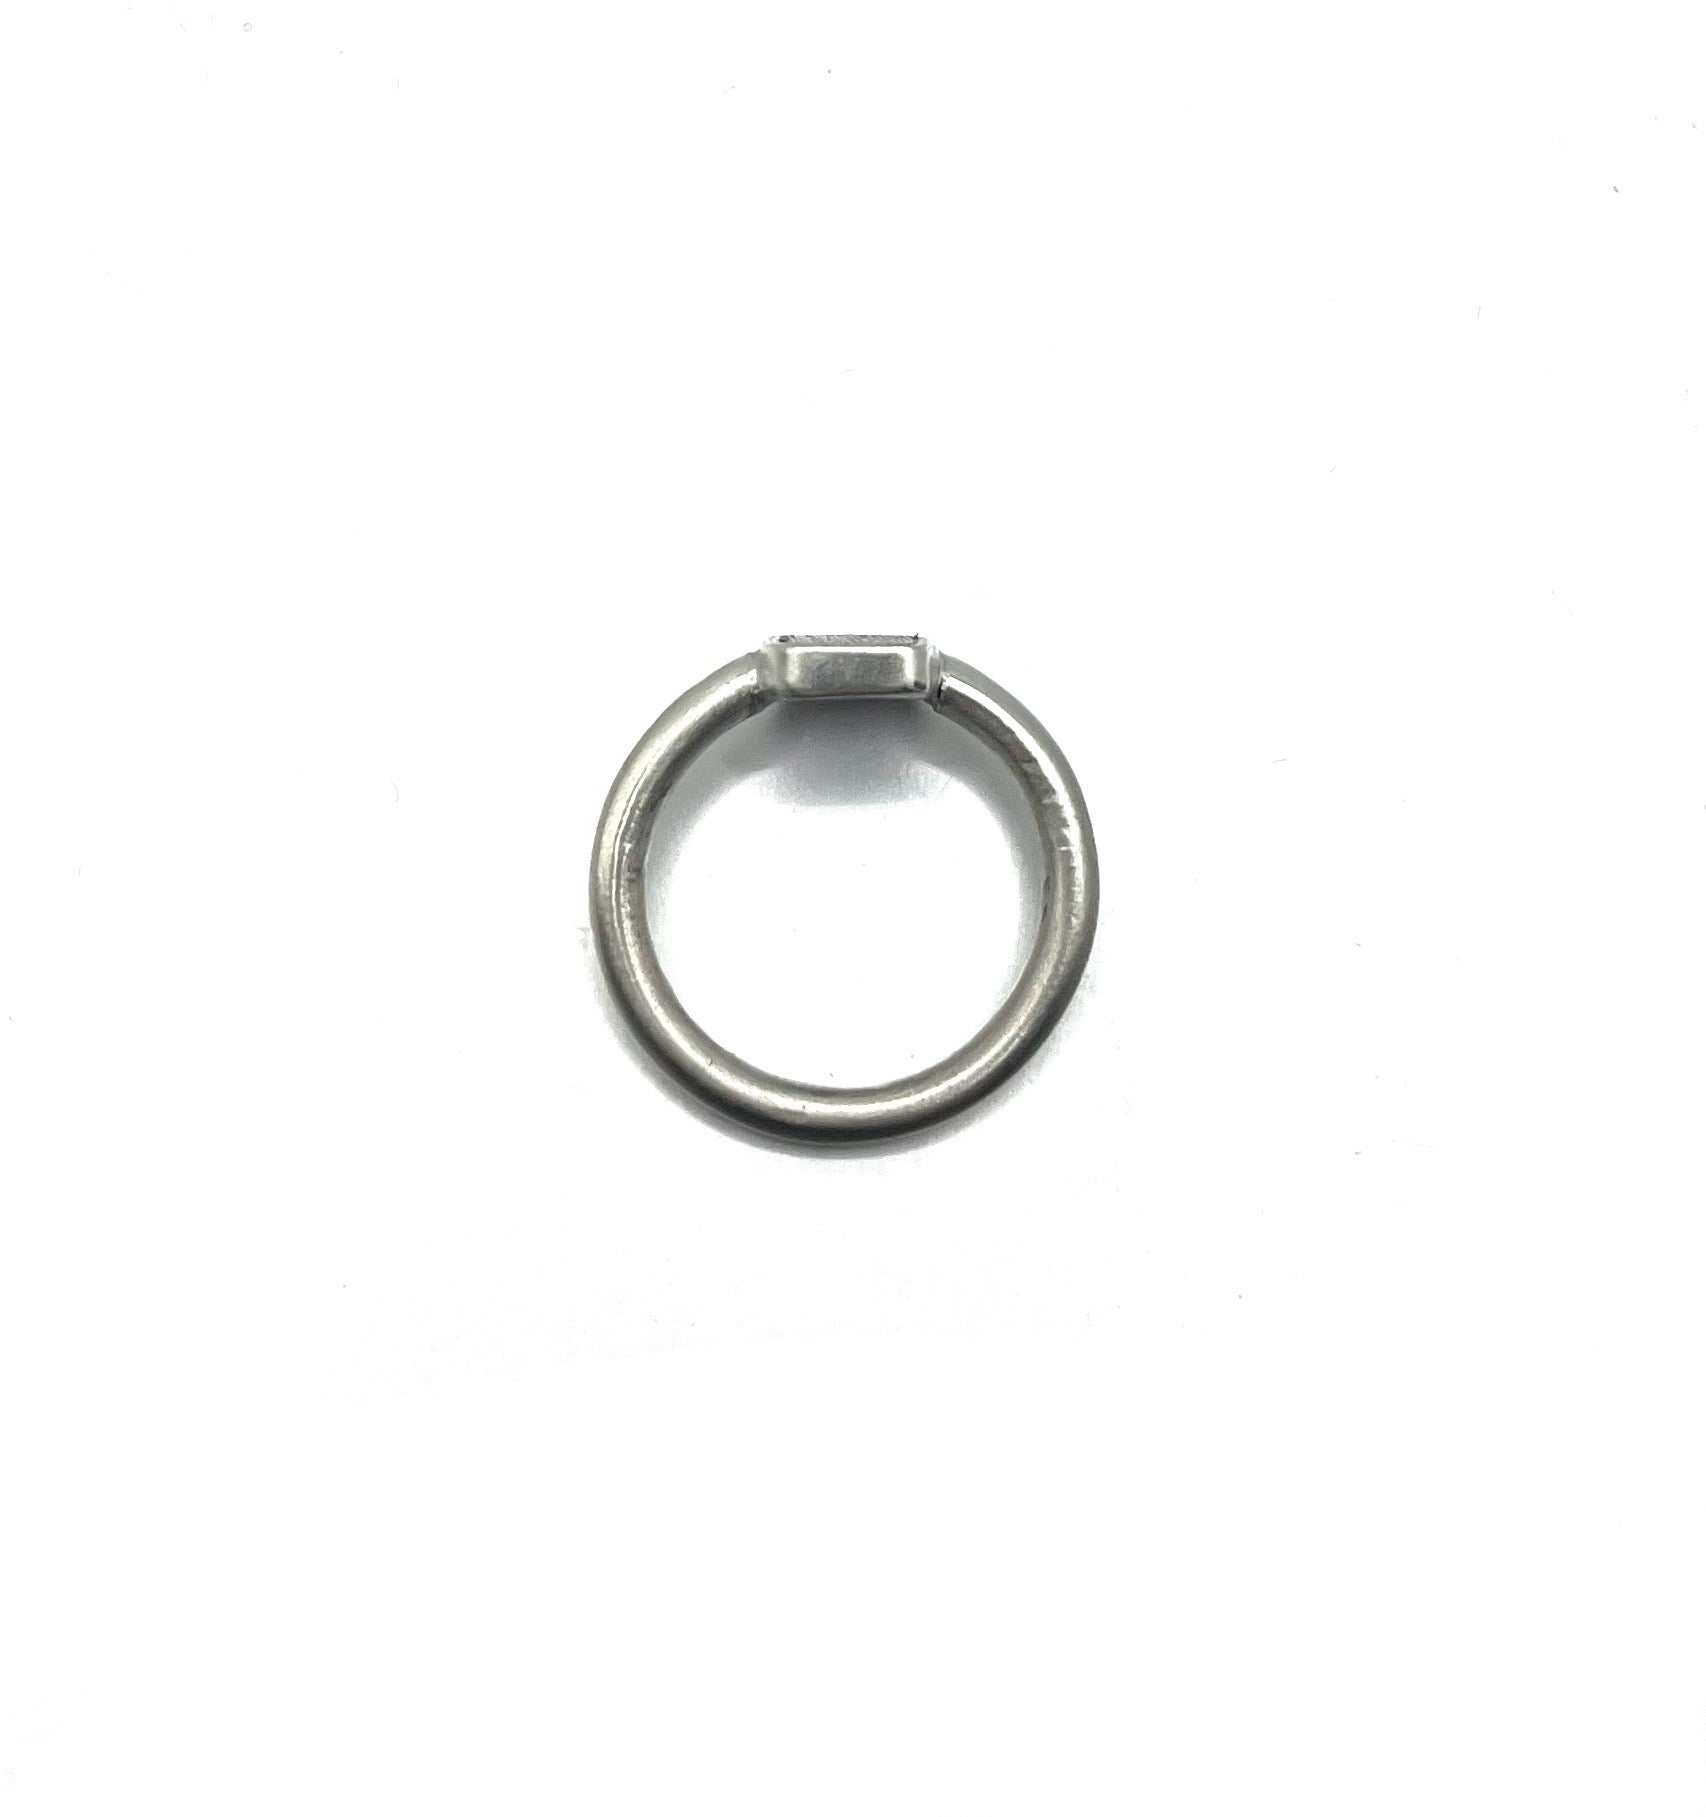 Ebony Inlay Sterling Ring